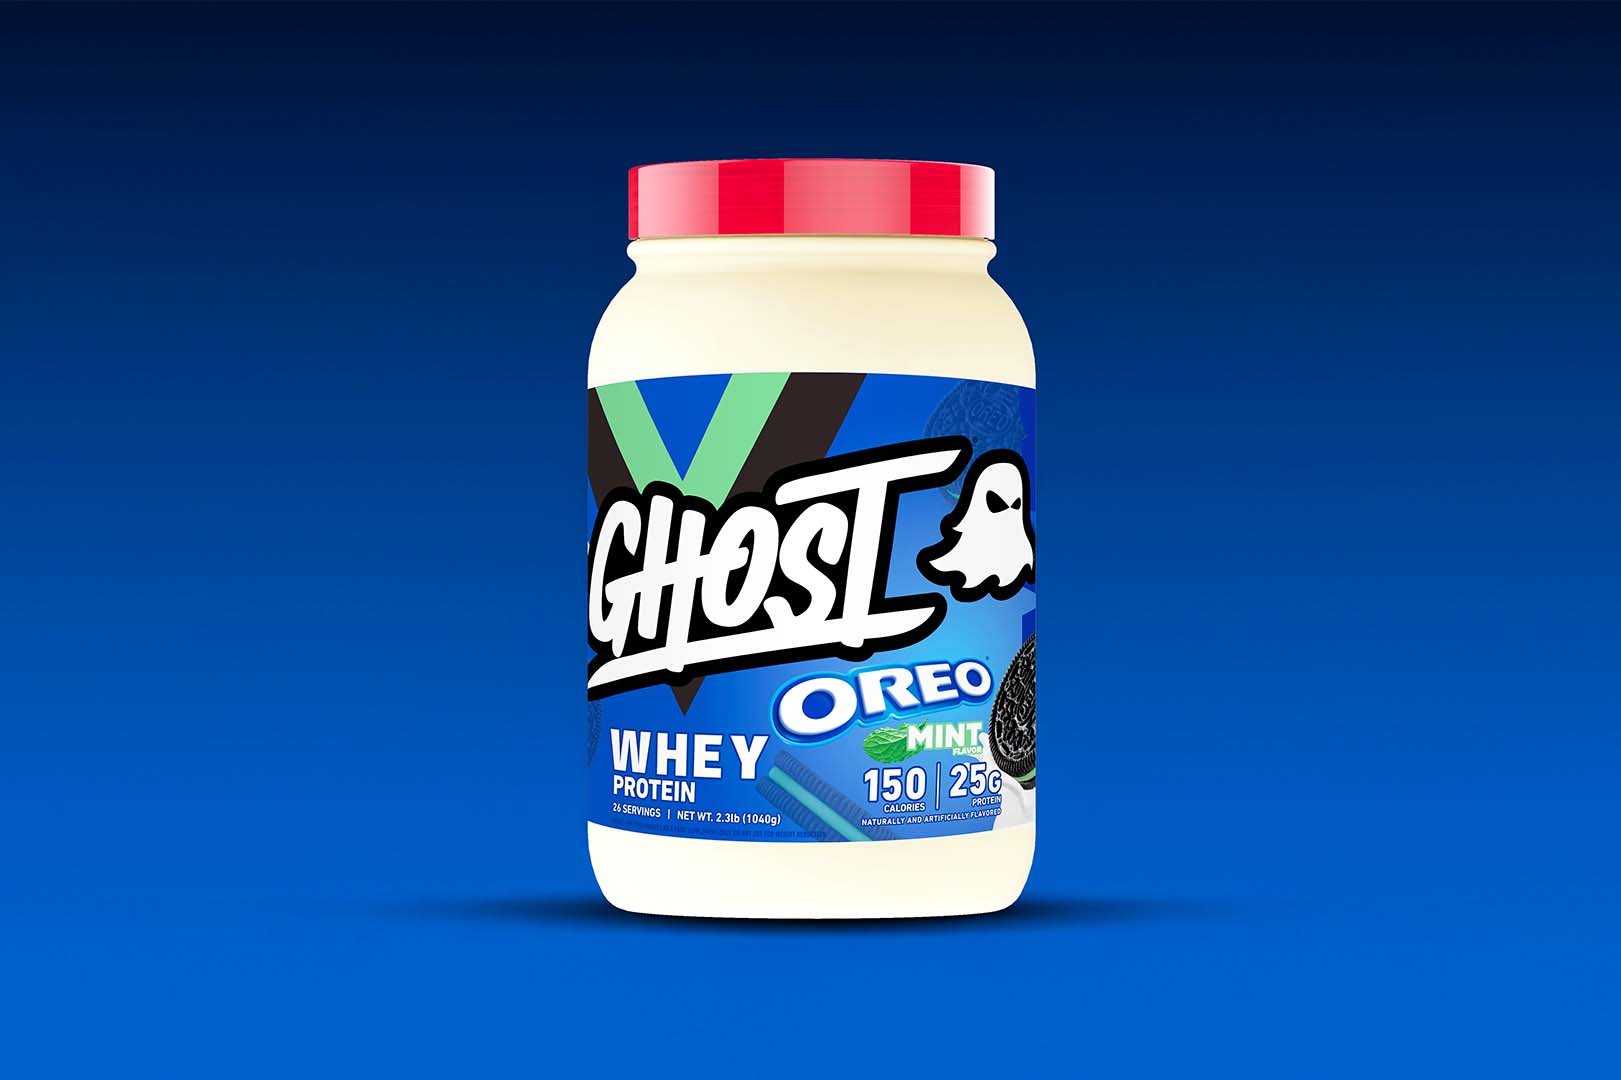 Oreo Mint Ghost Whey Protein Powder